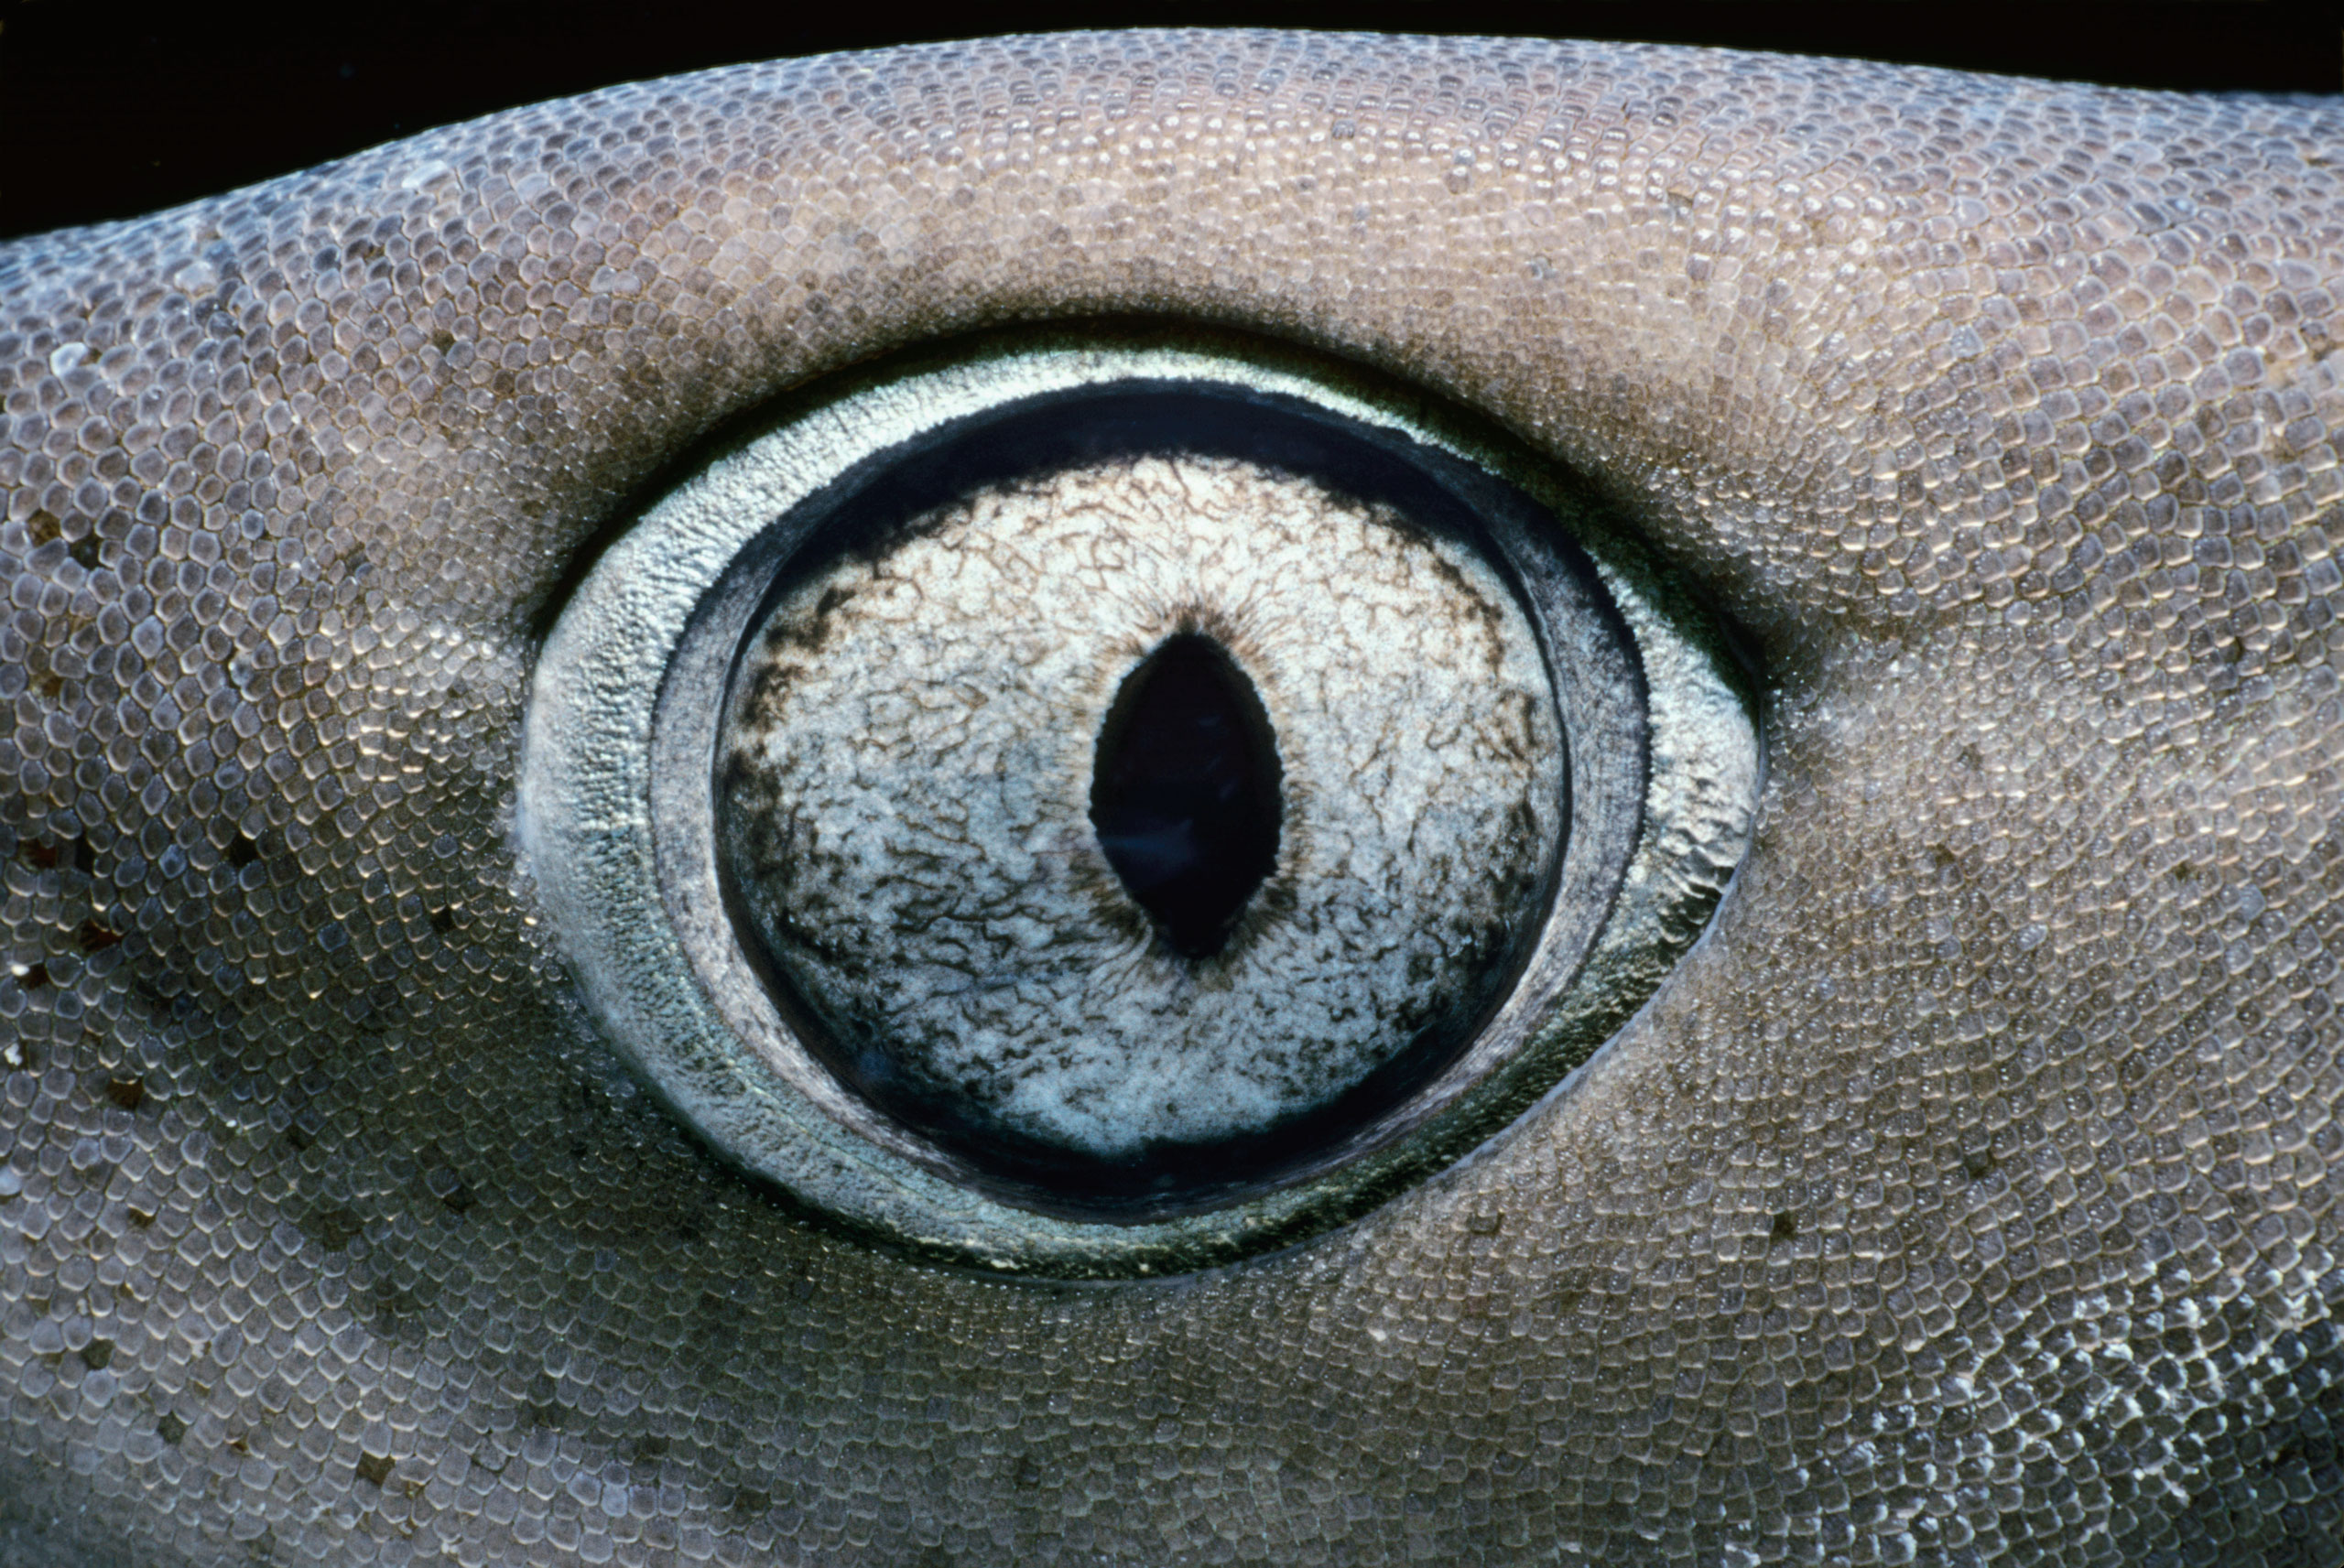 Eye of Whitetip Reef Shark (Triaenodon obesus), Cocos Island, Costa Rica - Pacific Ocean.